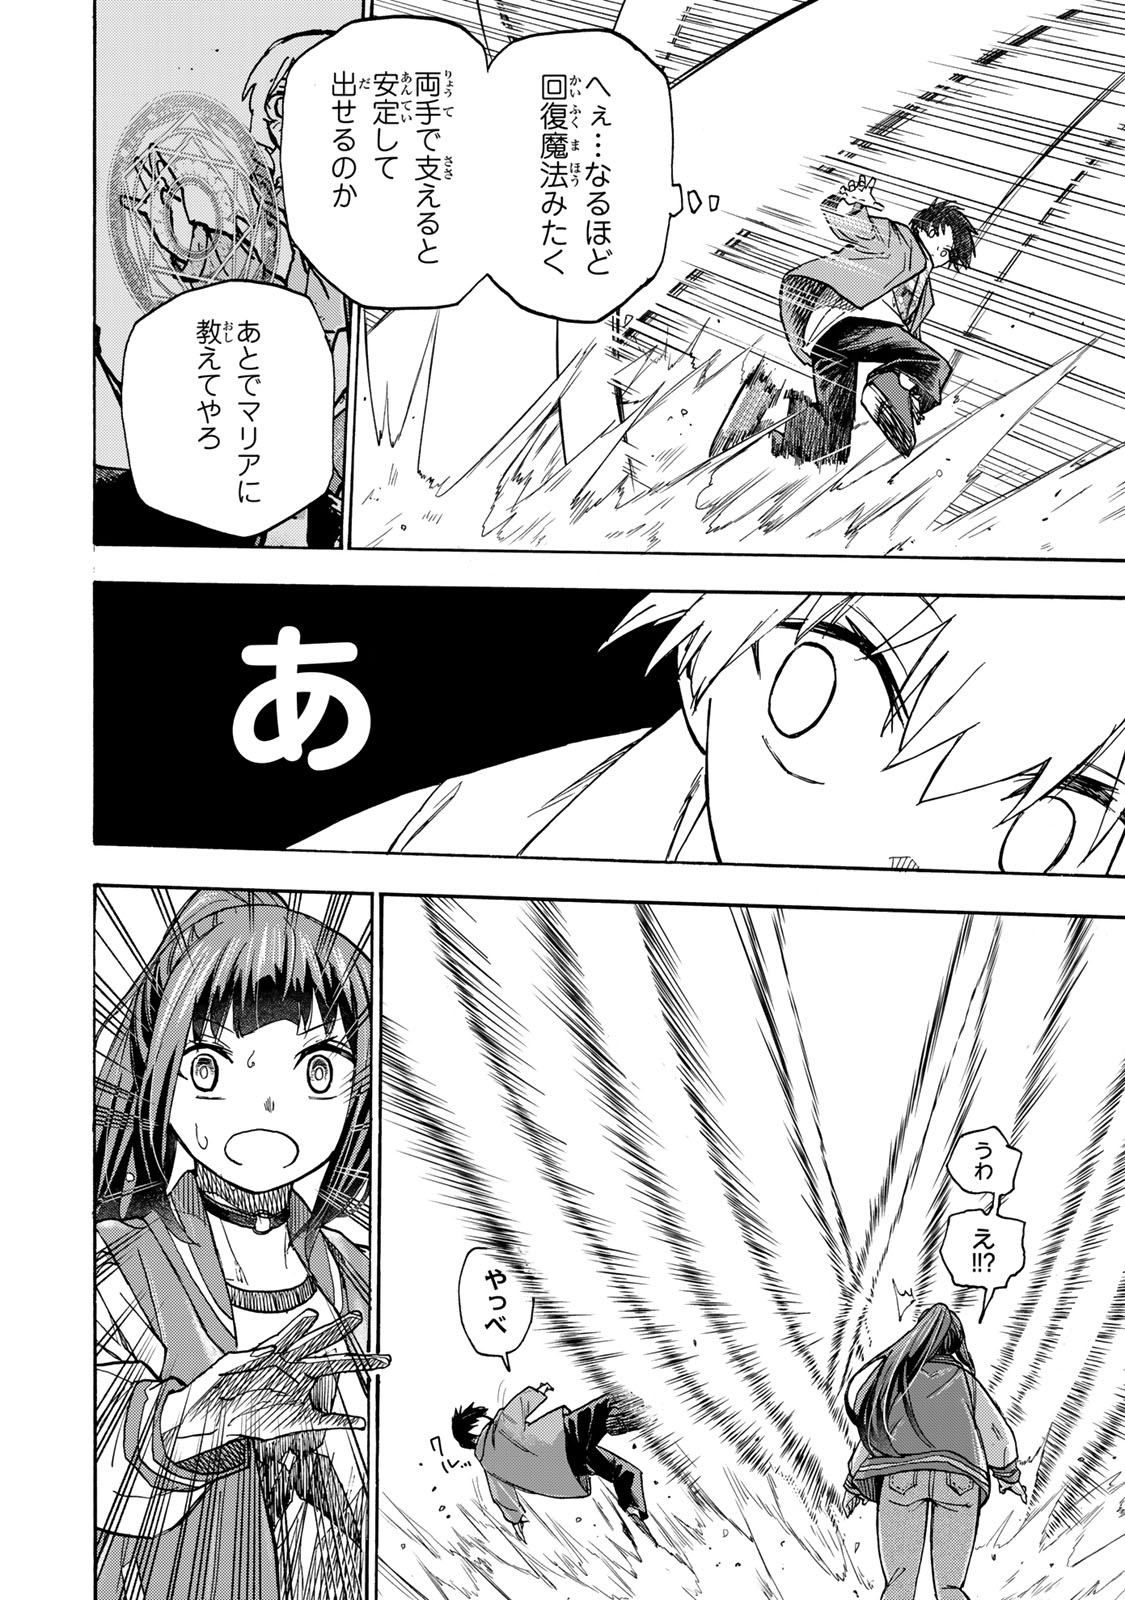 Saikyou de Saisoku no Mugen Level Up - Chapter 9 - Kissmanga